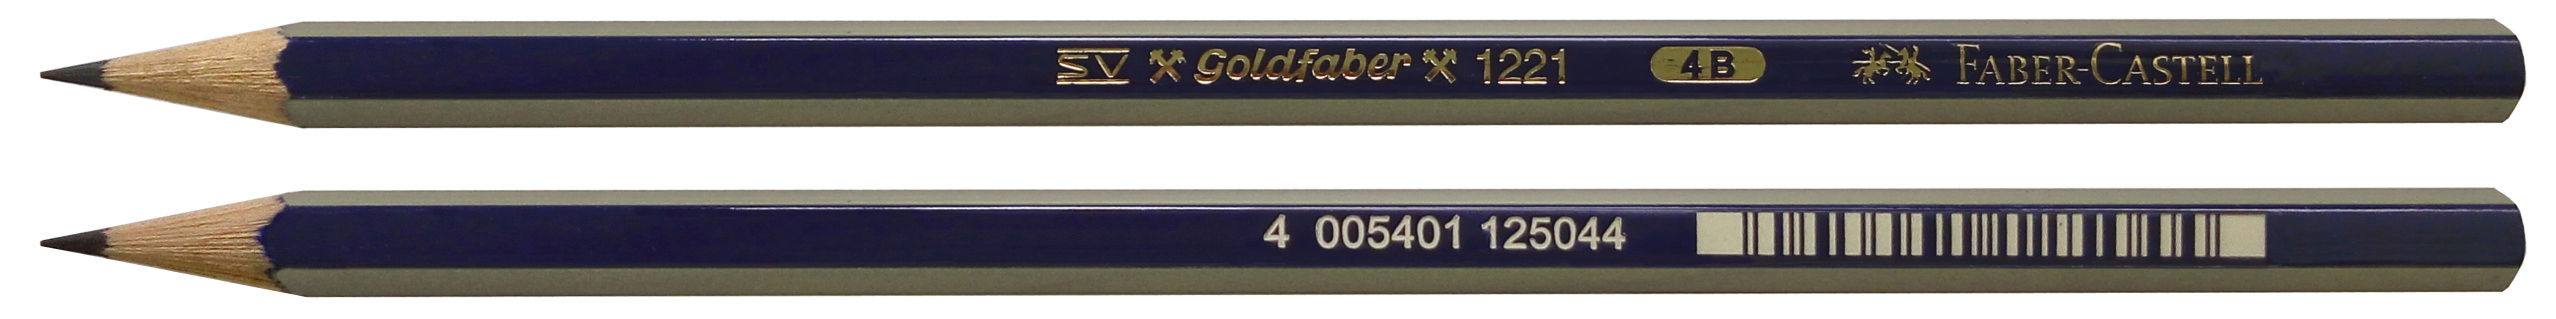 FABER-CASTELL Crayon 4B 112504 Goldfaber Goldfaber